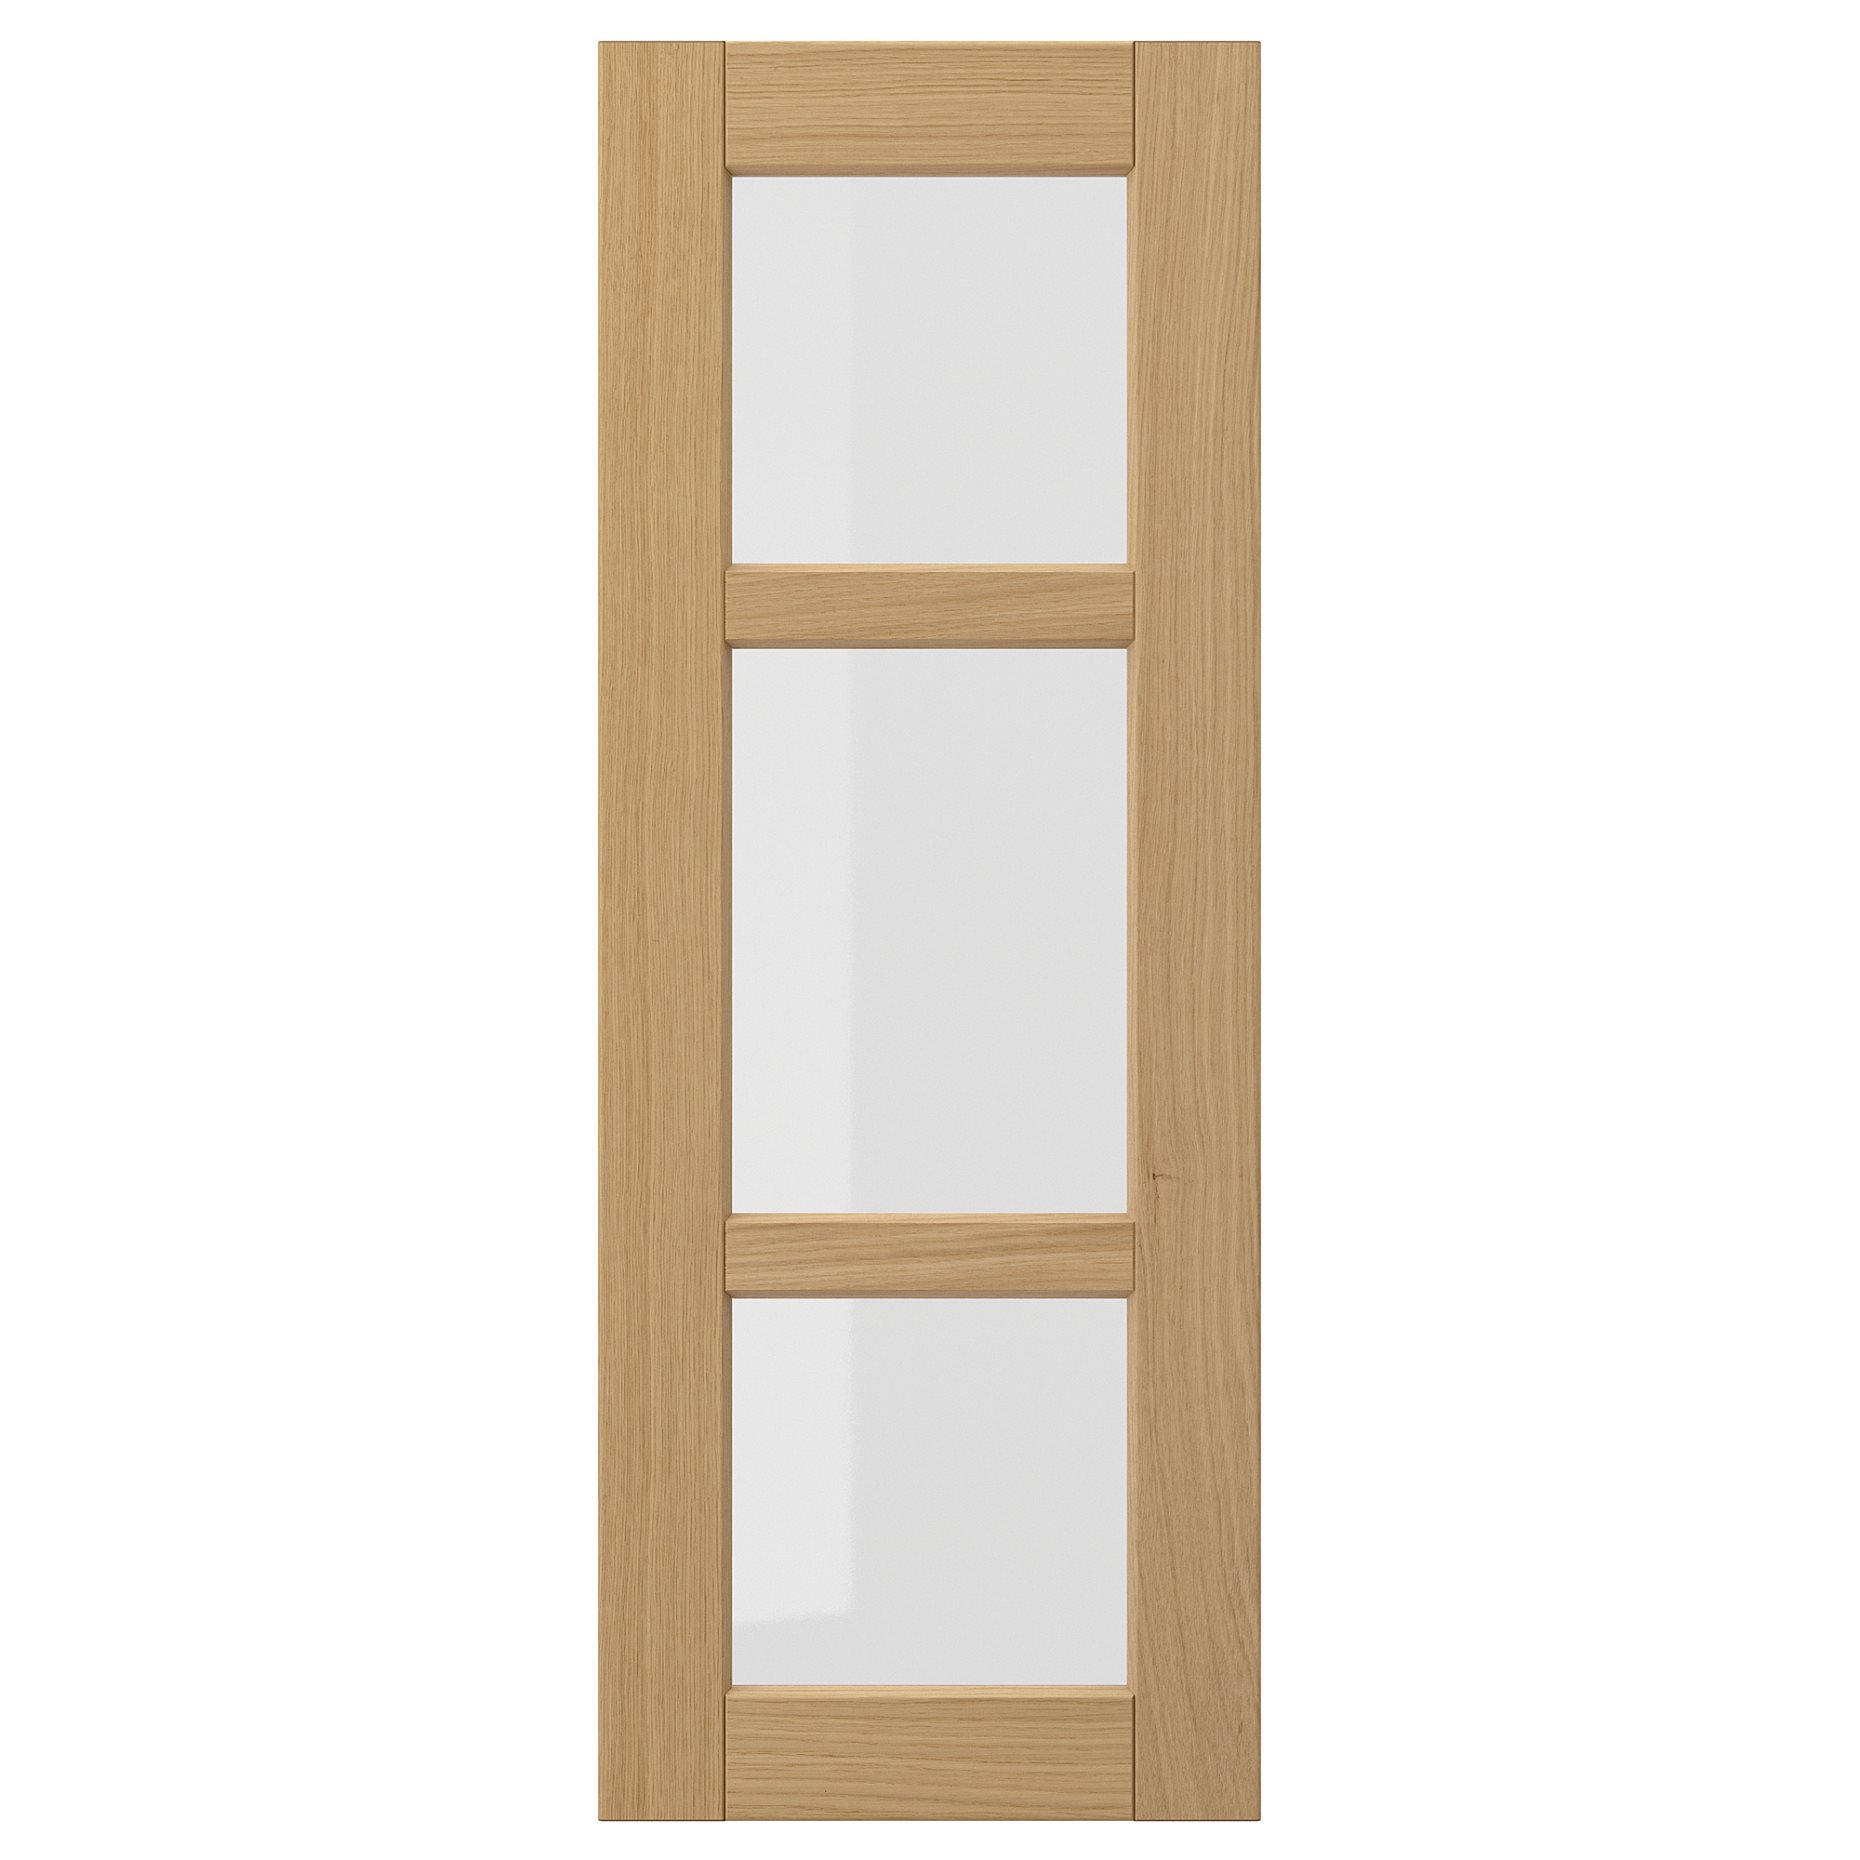 FORSBACKA, γυάλινη πόρτα, 30x80 cm, 705.652.55